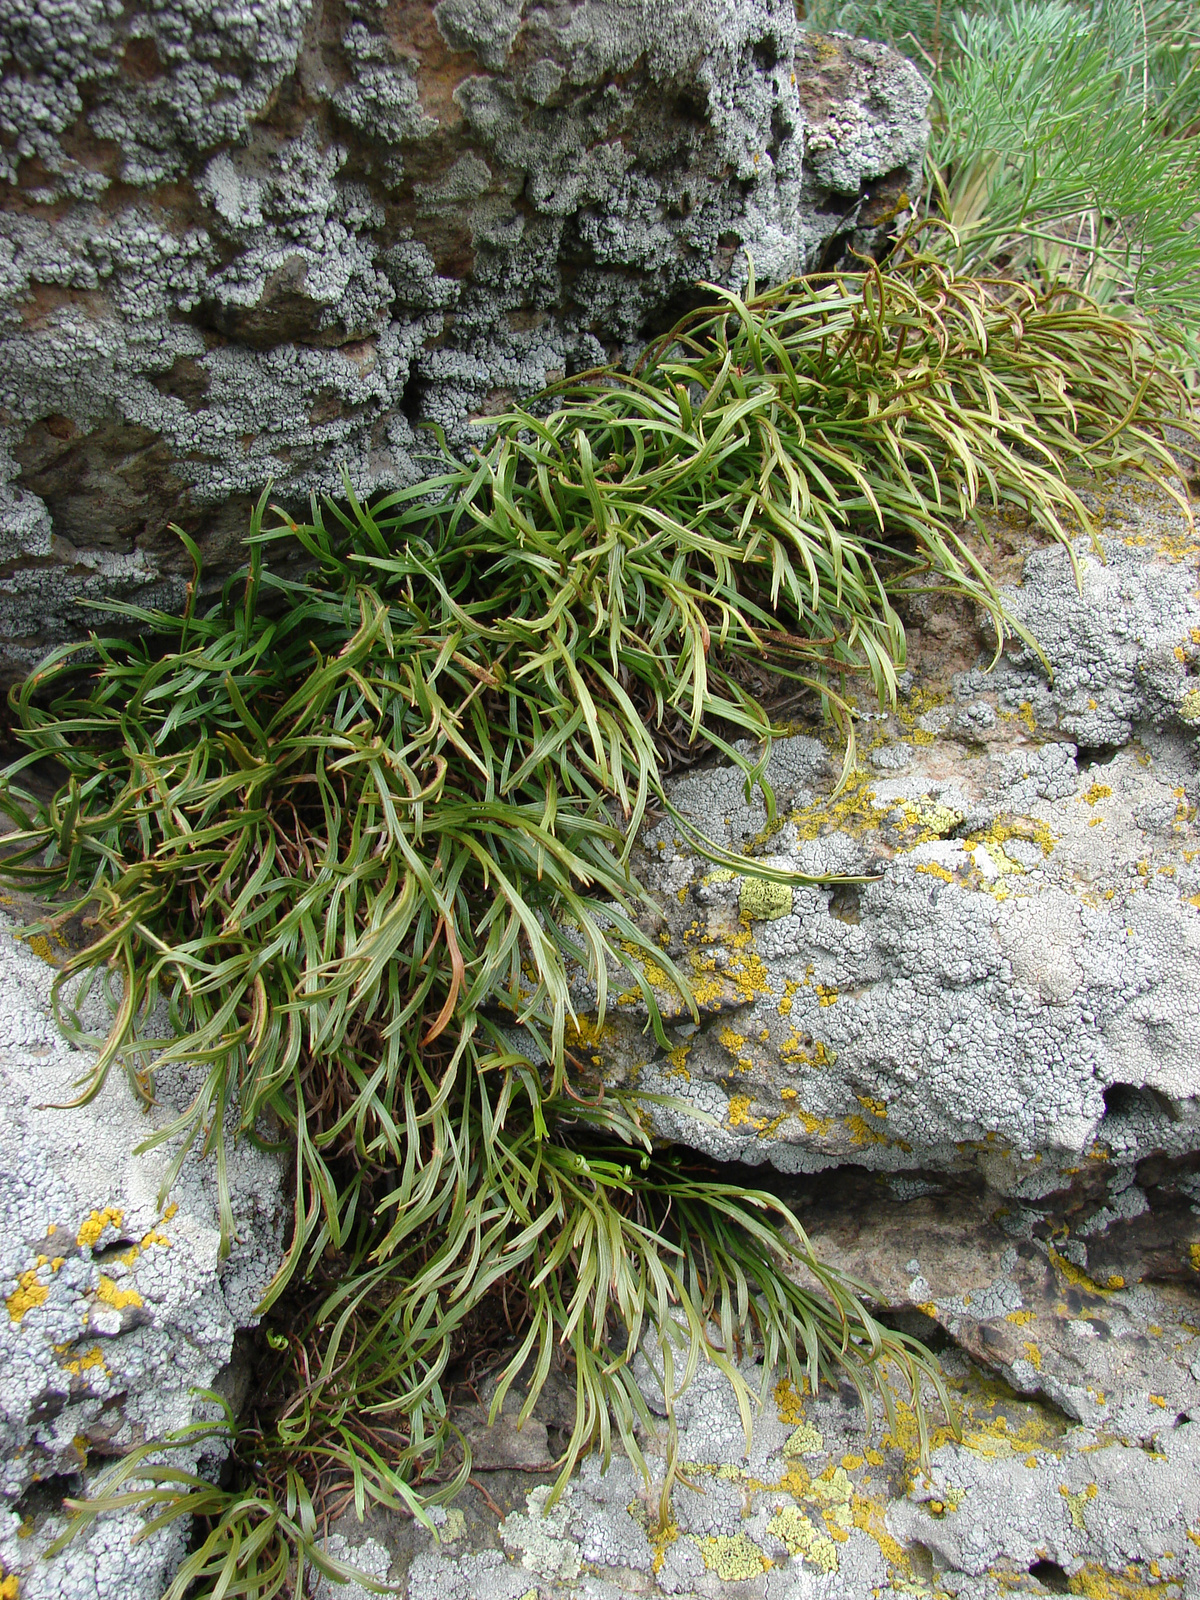 Északi fodorka (Asplenium septentrionale)